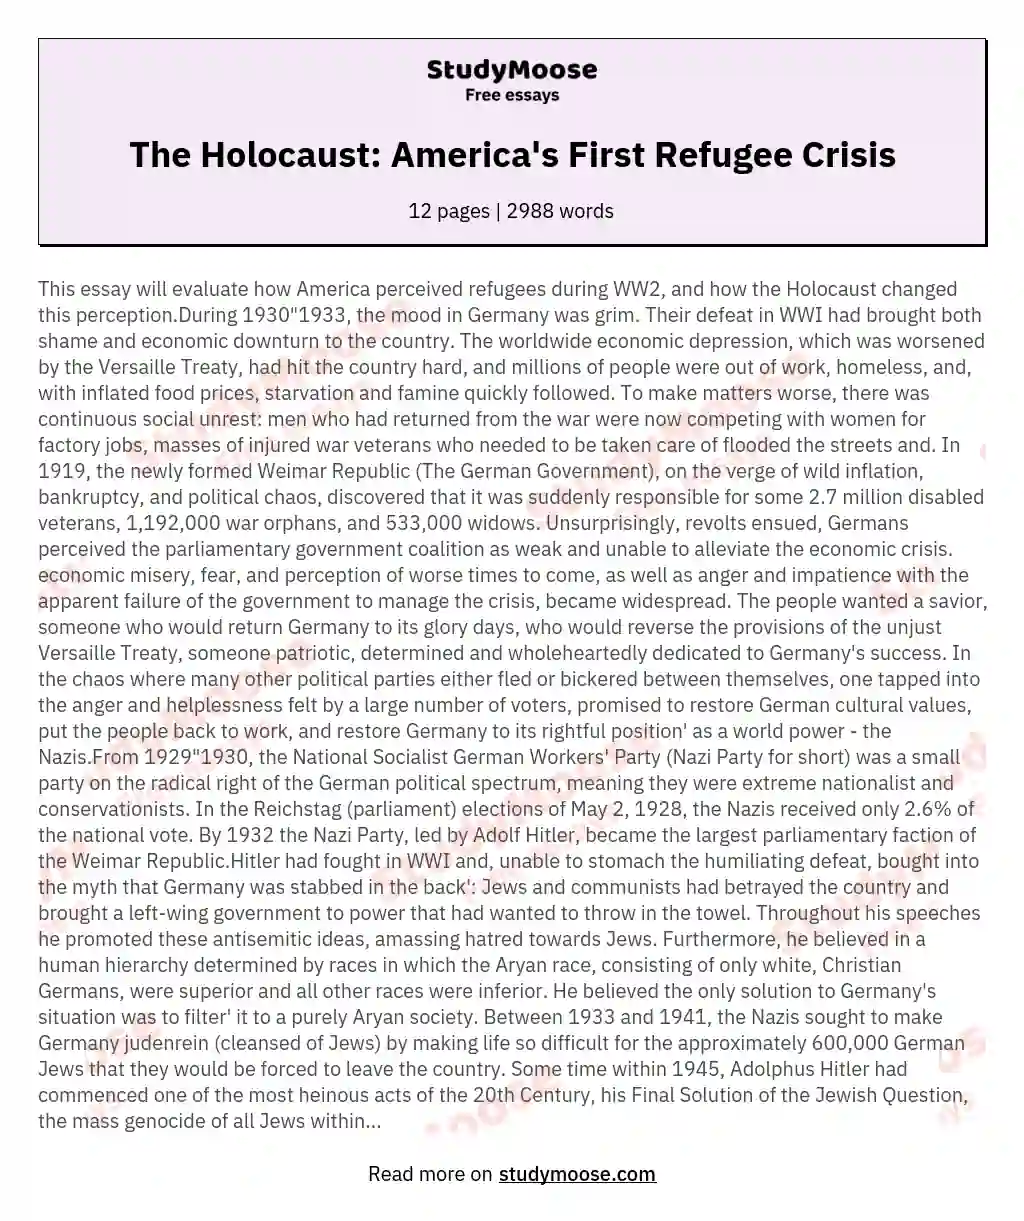 The Holocaust: America's First Refugee Crisis essay